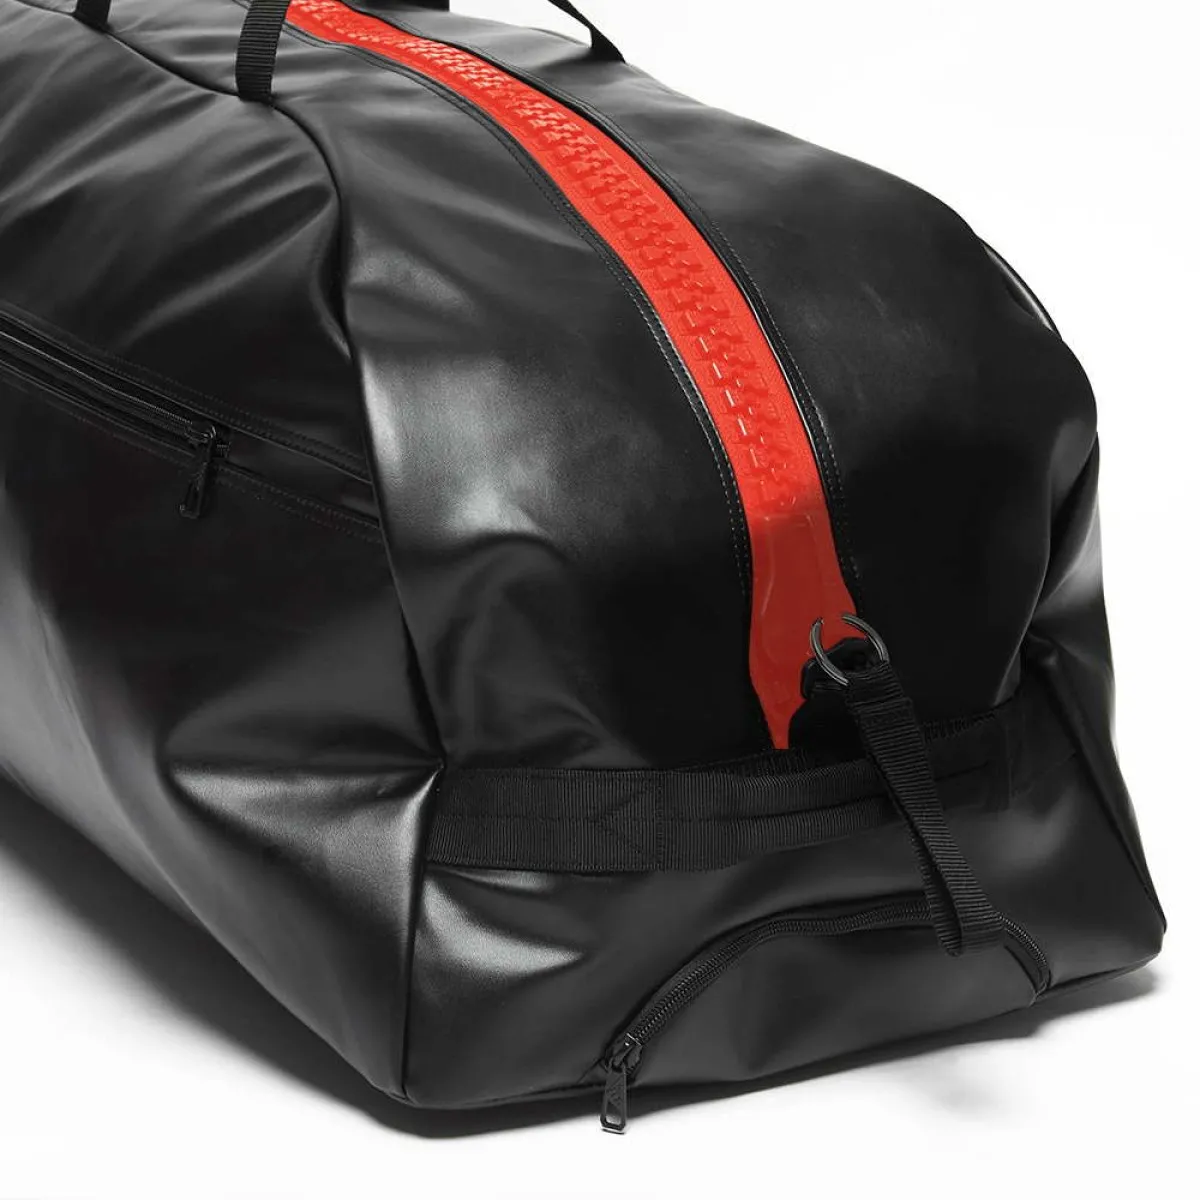 adidas trolley black/red imitation leather